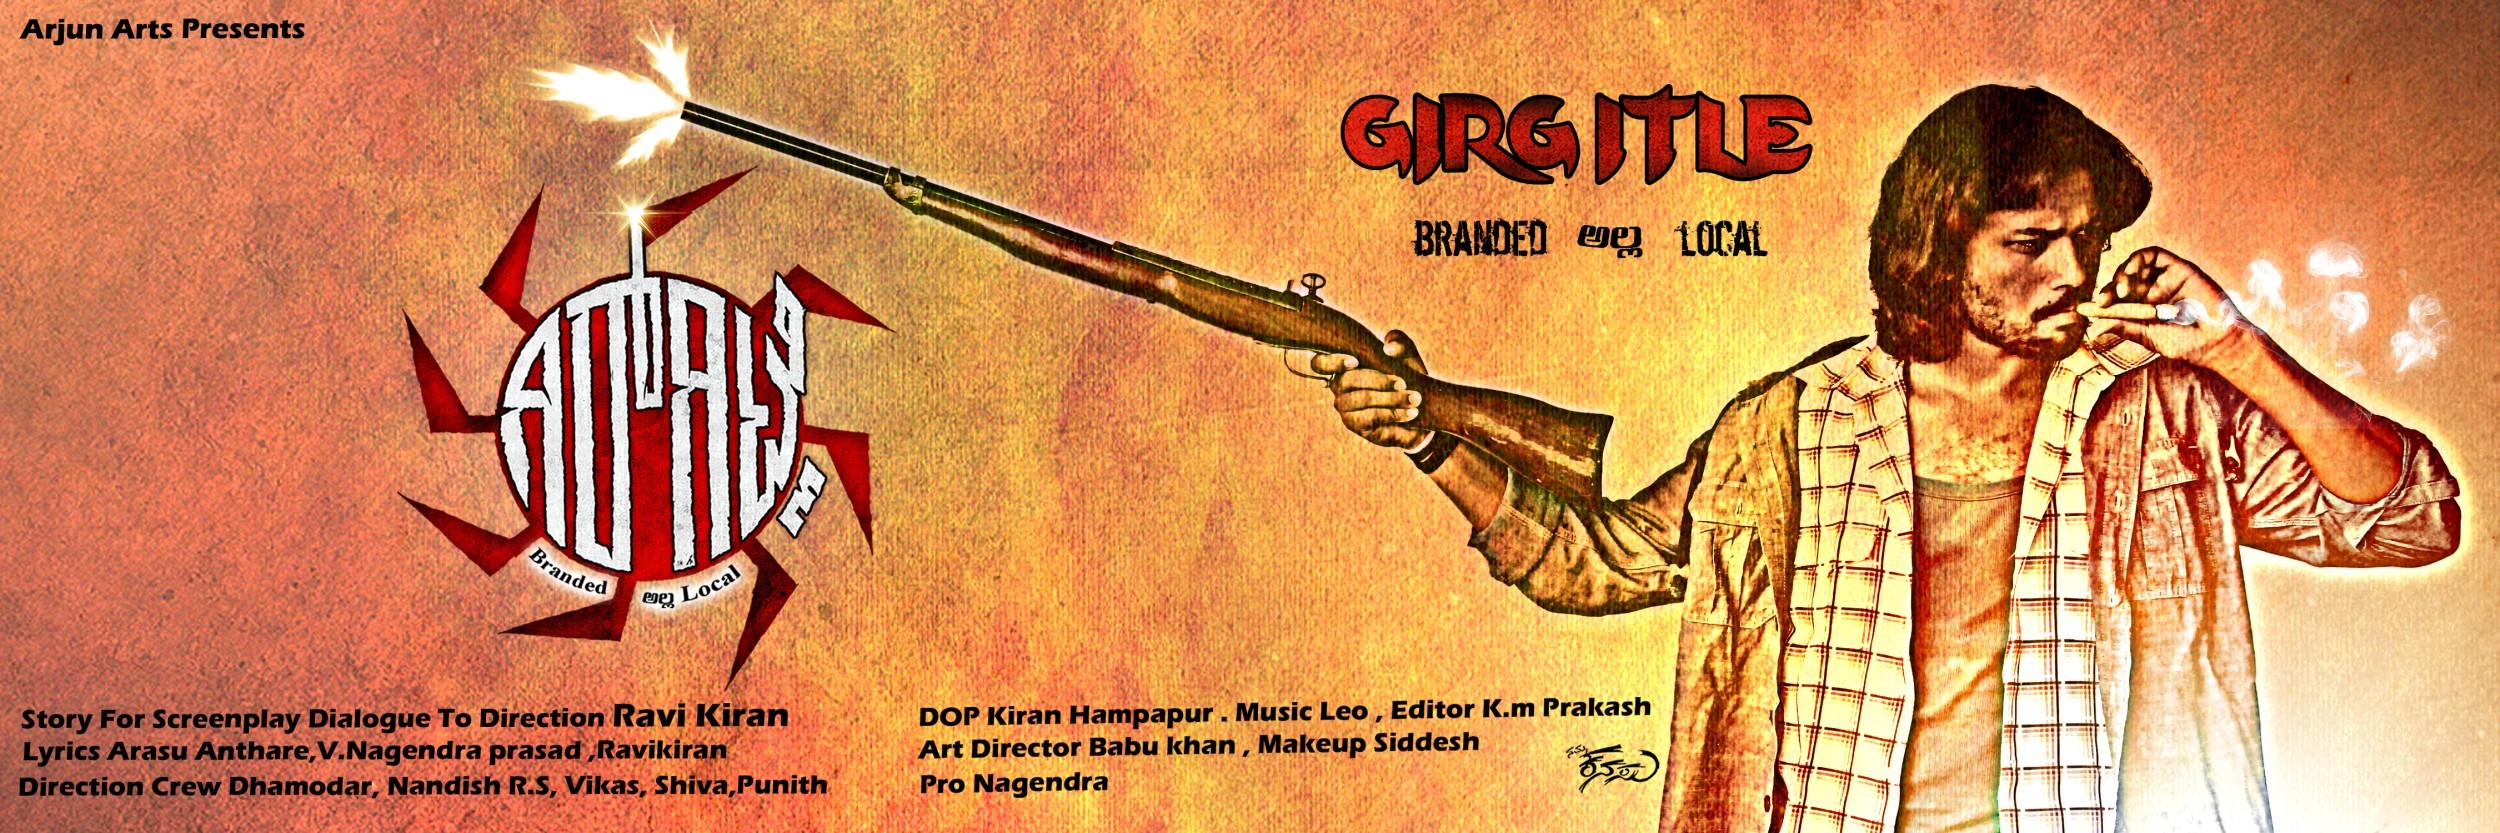 Mega Sized Movie Poster Image for Girgitle (#7 of 23)